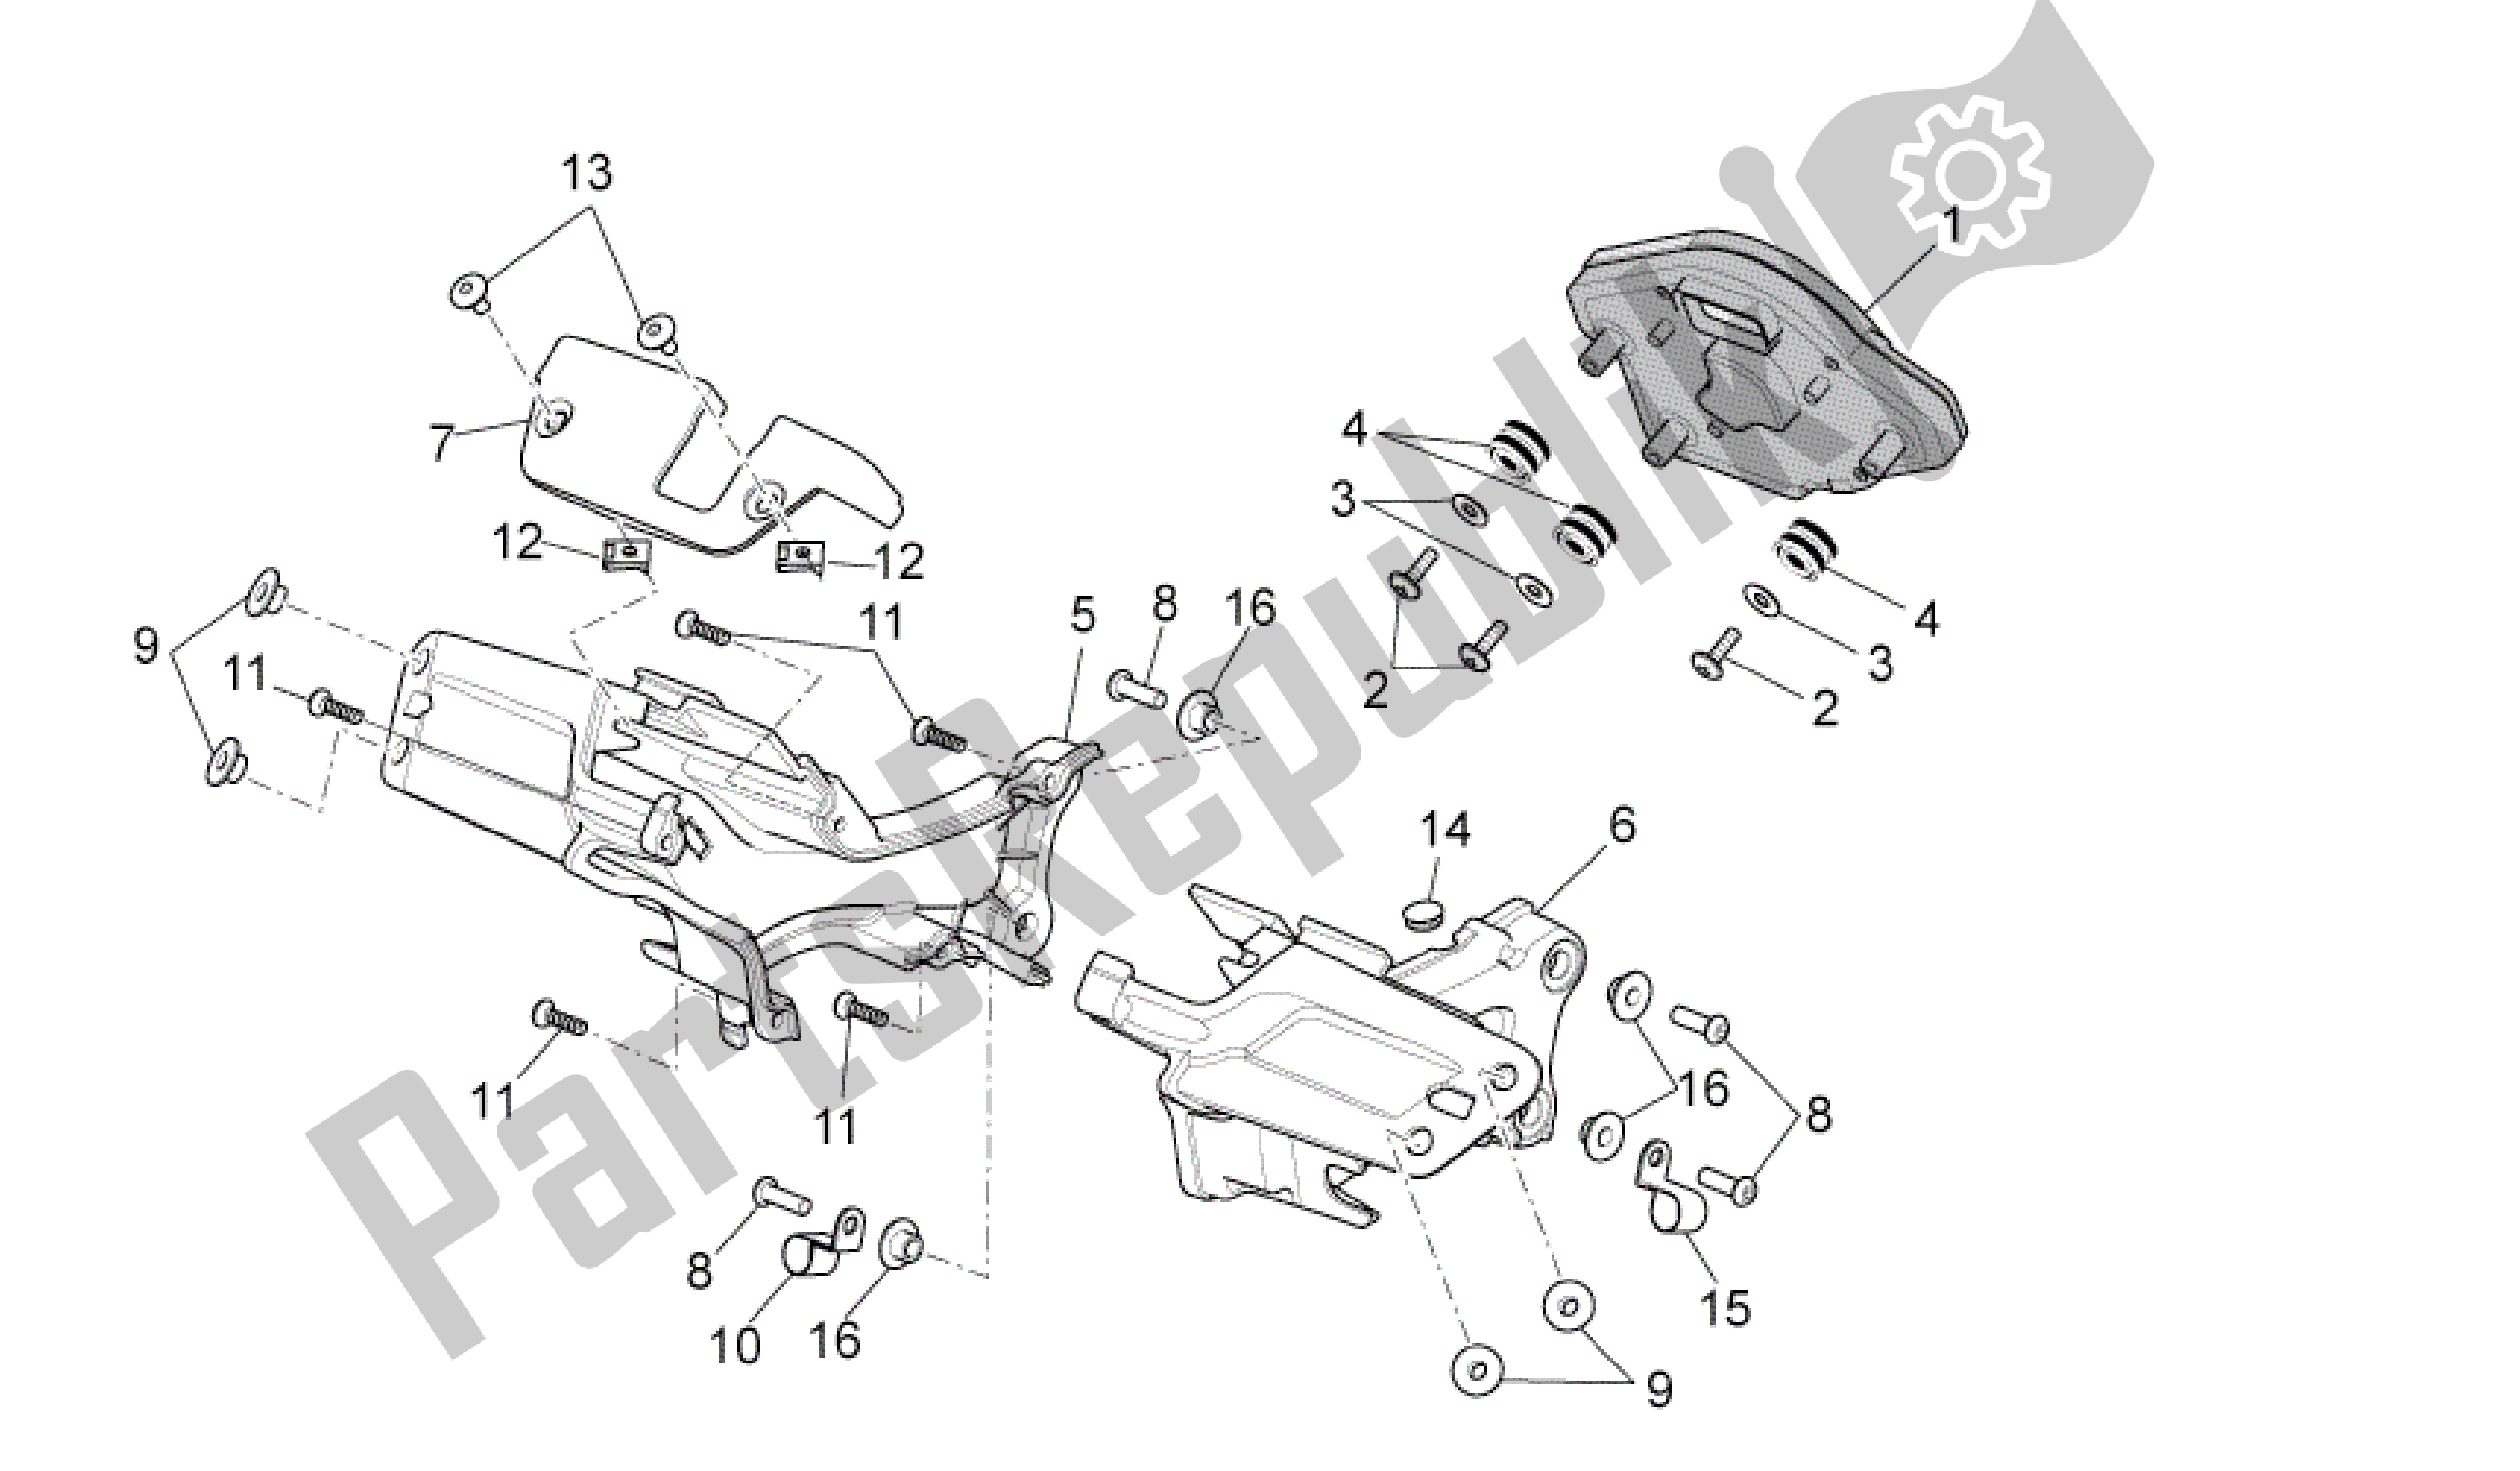 All parts for the Dashboard of the Aprilia RSV4 Aprc R 3982 1000 2011 - 2012